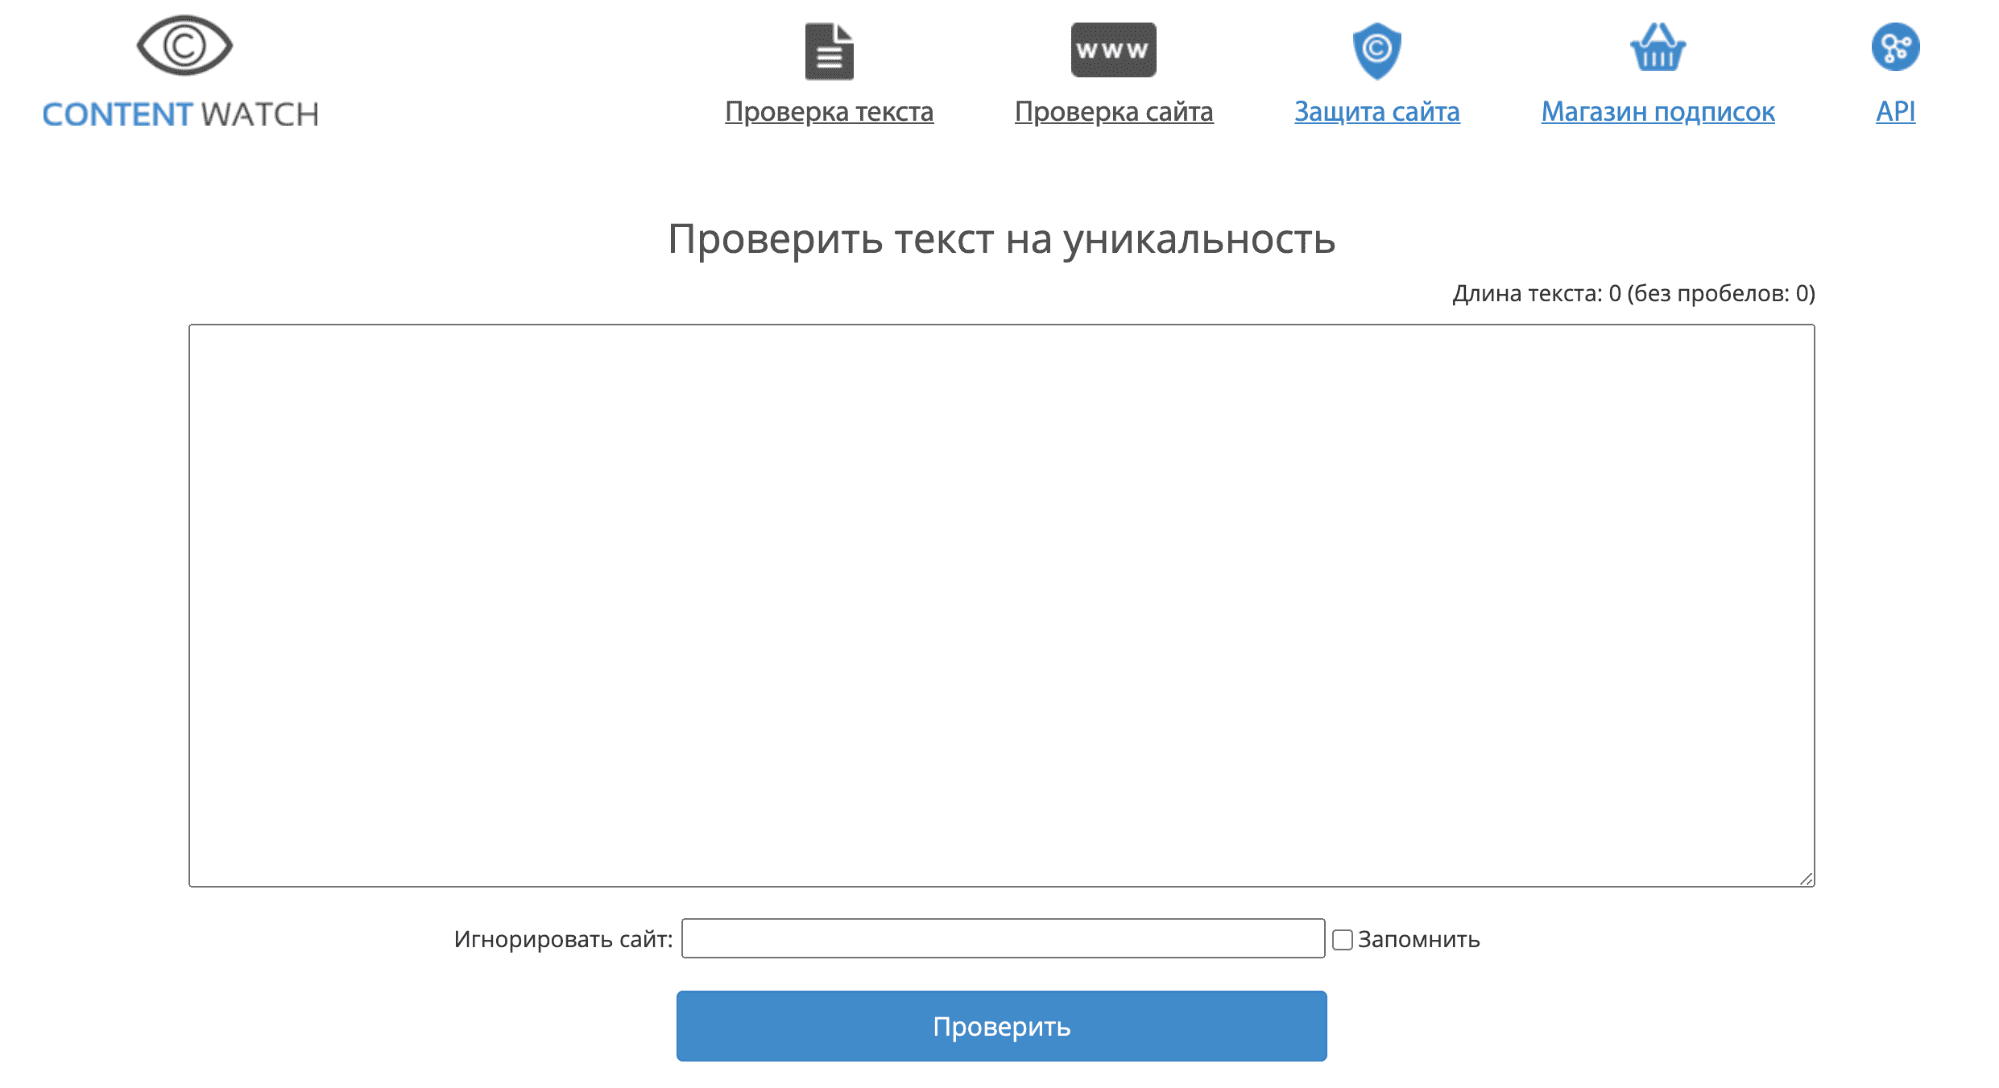 Content-watch.ru — интерфейс сервиса.